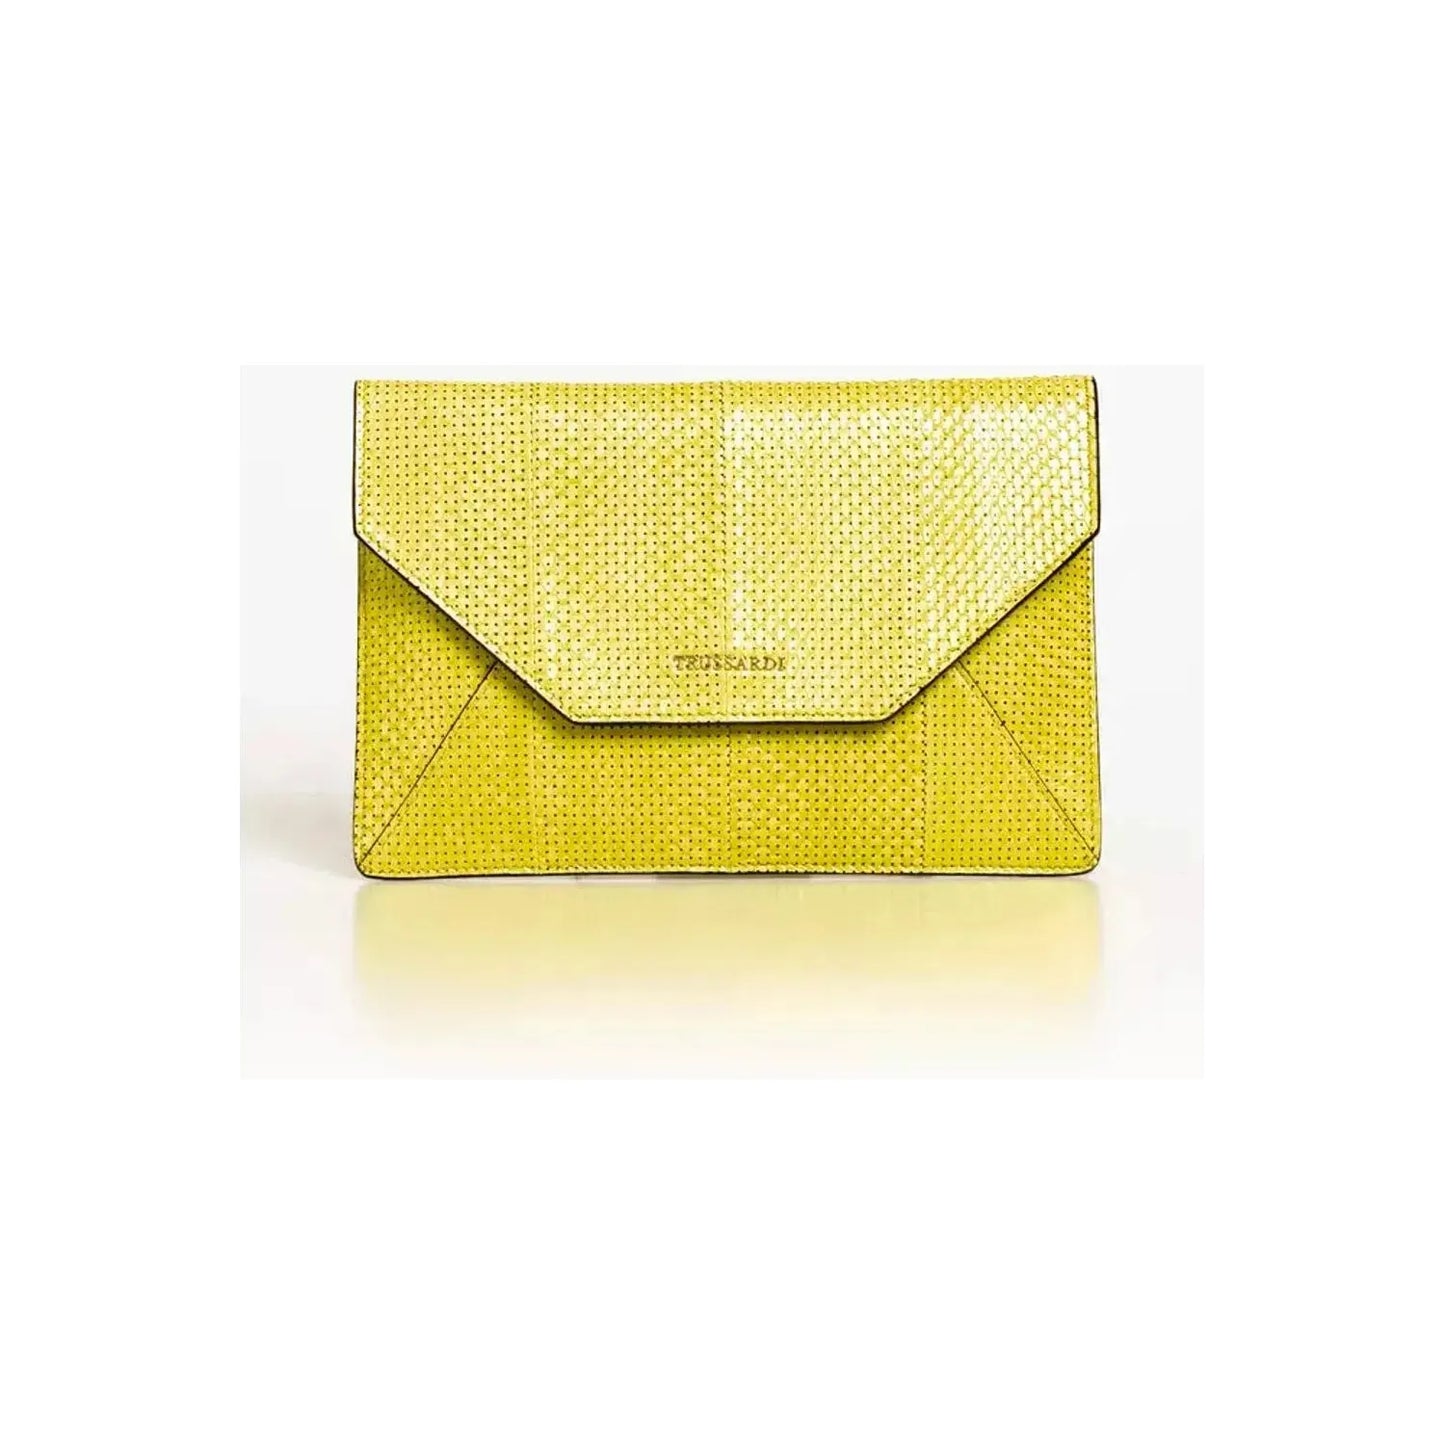 Trussardi Elegant Envelope Clutch in Delicate Elaphe WOMAN CLUTCH yellow-leather-clutch-bag stock_product_image_21569_667324310-38-680f0c63-943.webp